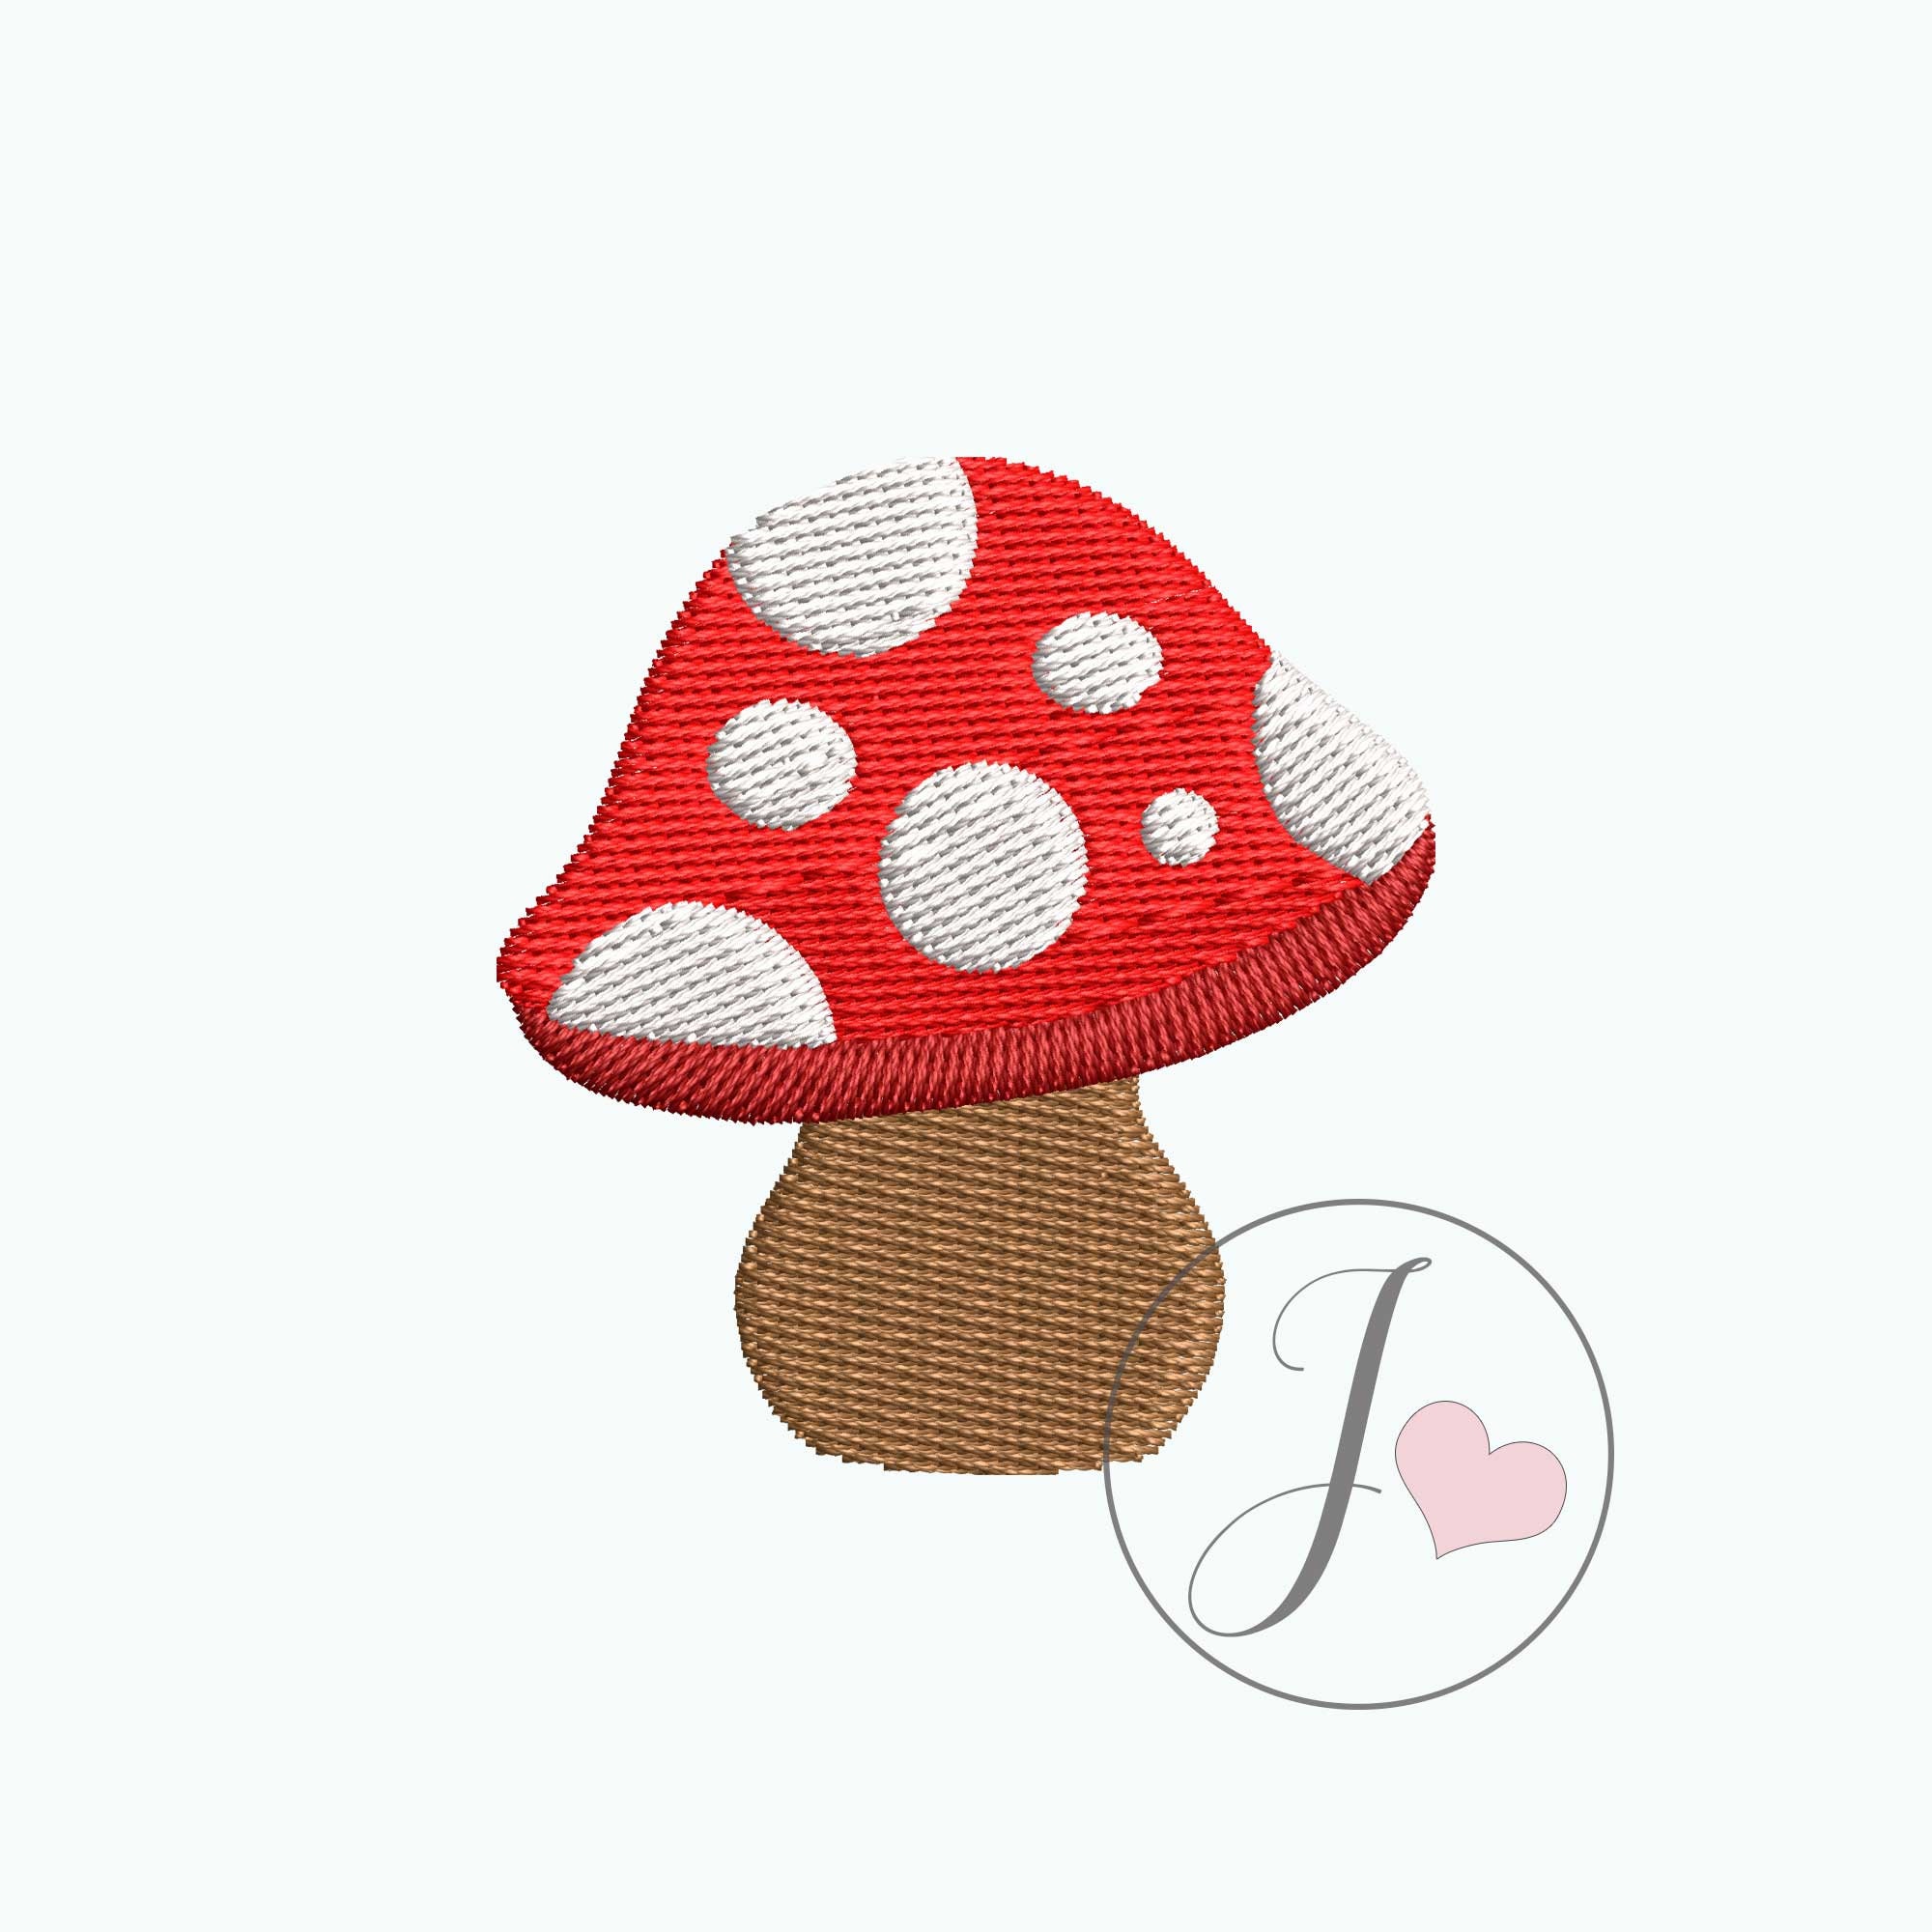 Mushroom Woolie Emotional Support Plush 